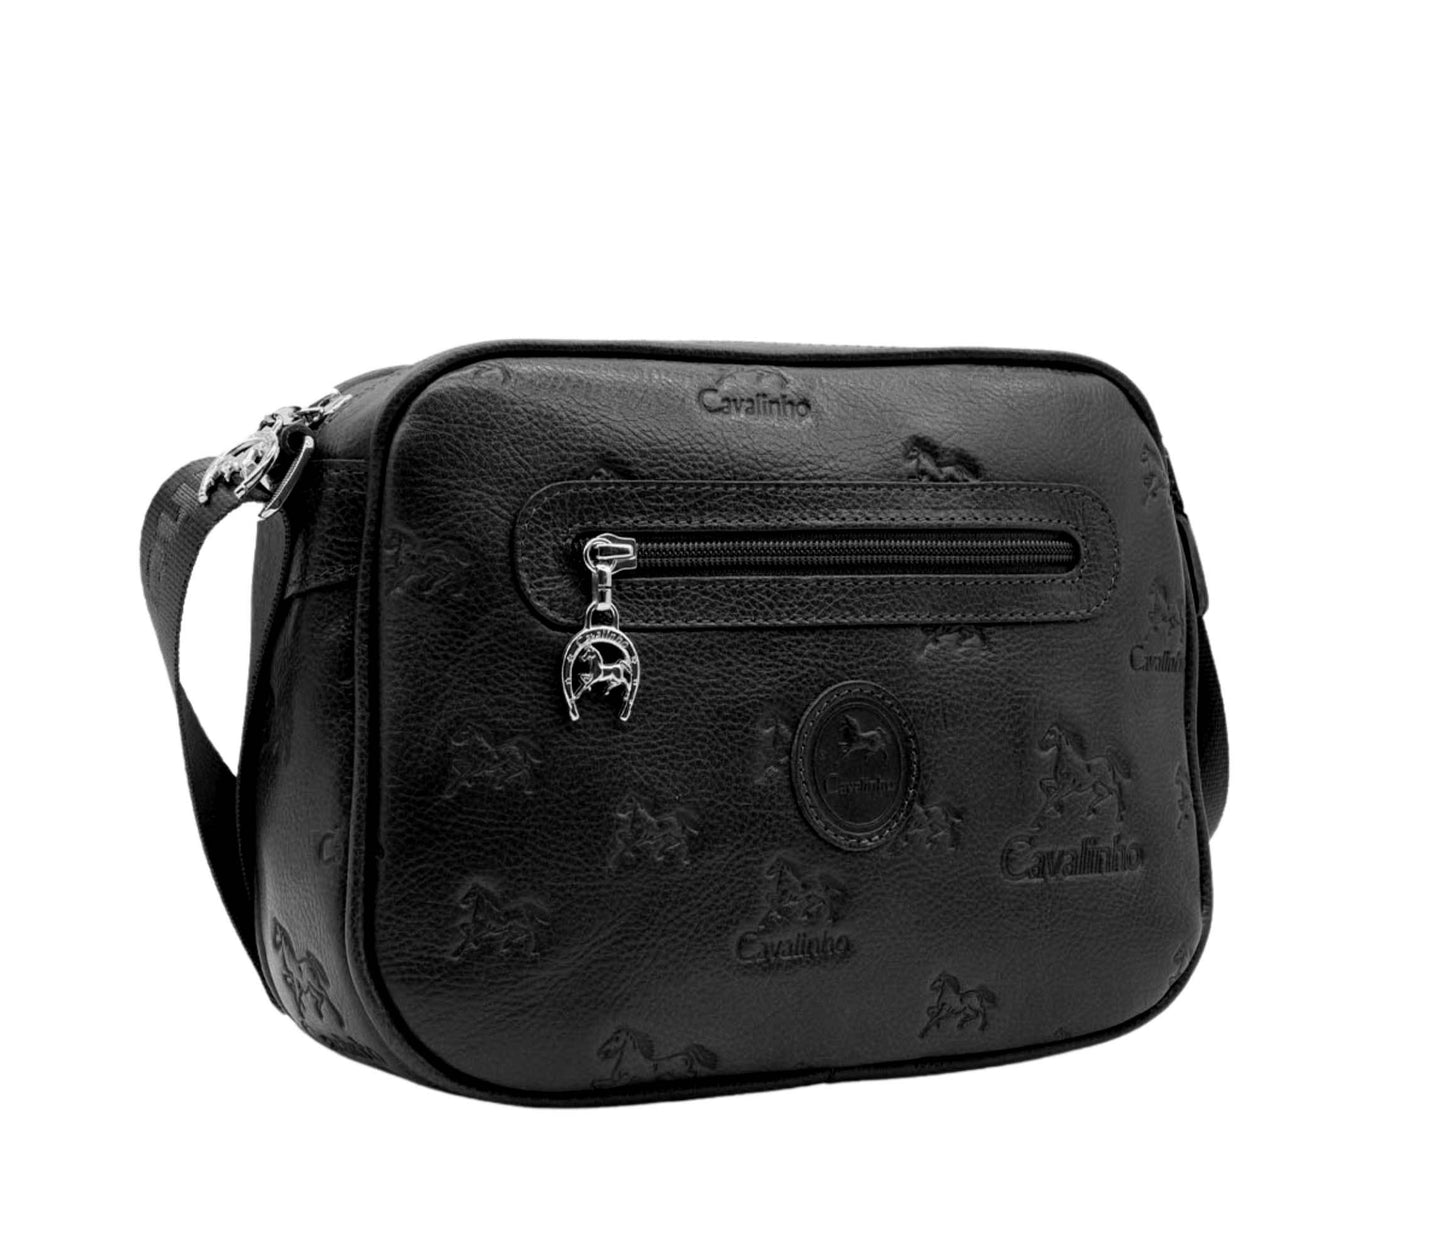 Cavalinho Cavalo Lusitano Leather Crossbody Bag - Black - 18090190.01_2